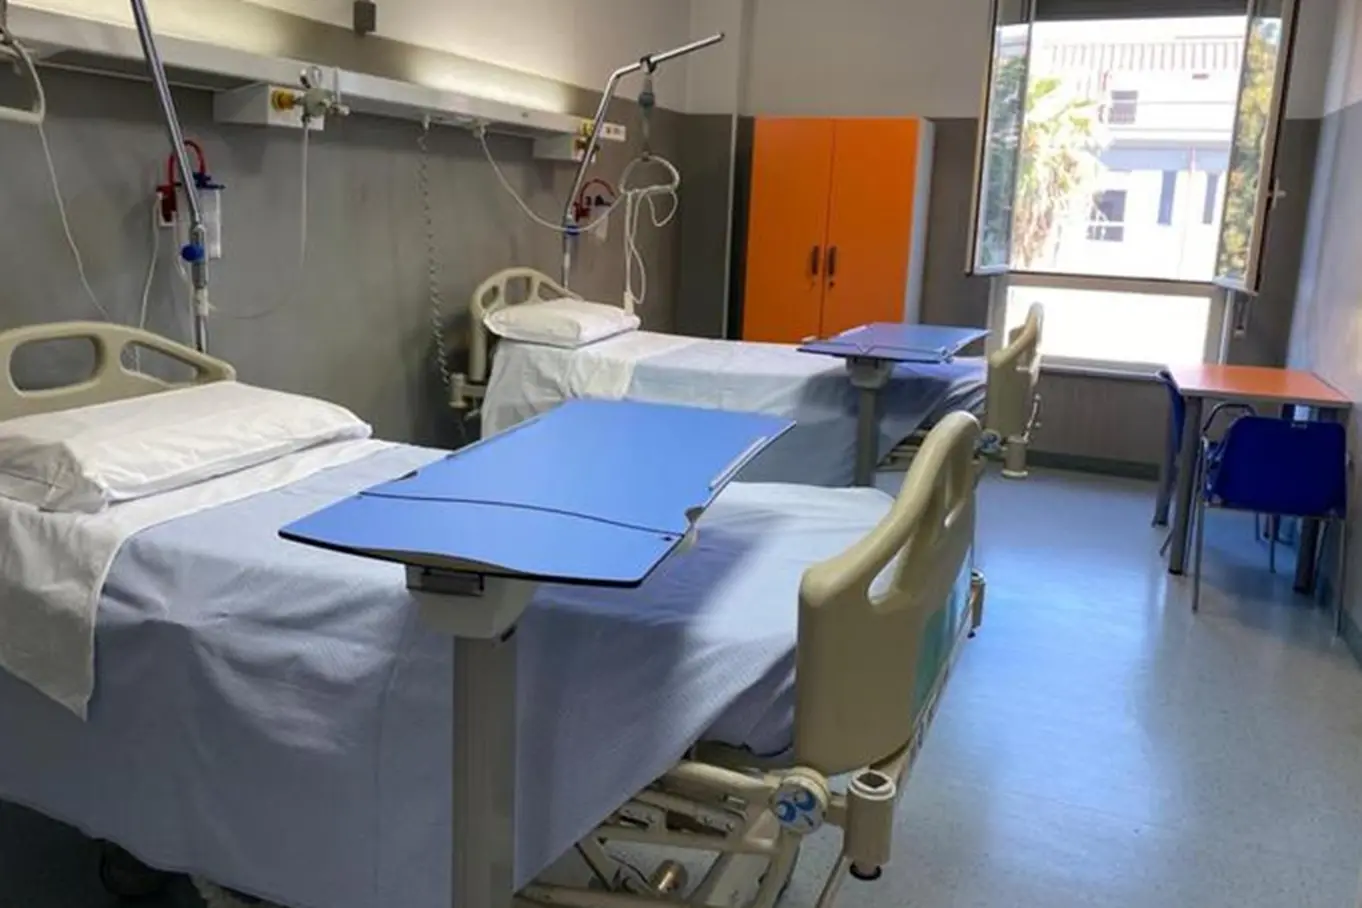 Un letto d'ospedale (Ansa)